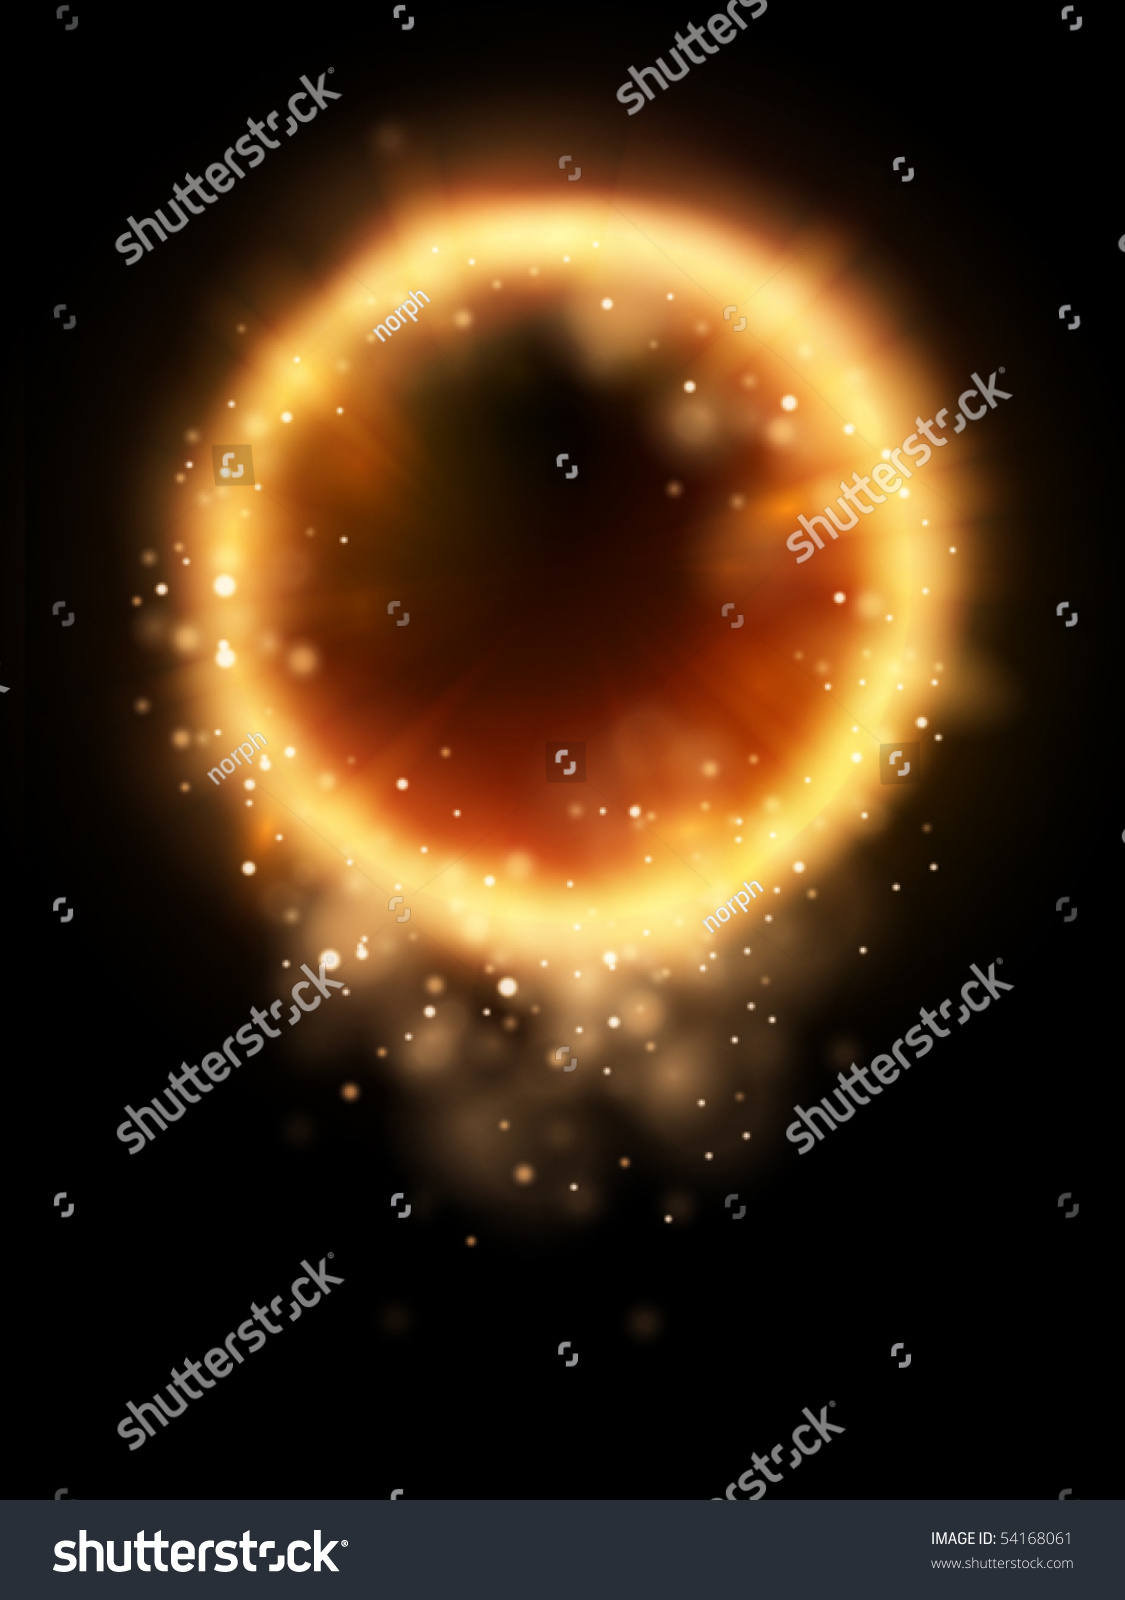 Vector Fire Ring - 54168061 : Shutterstock